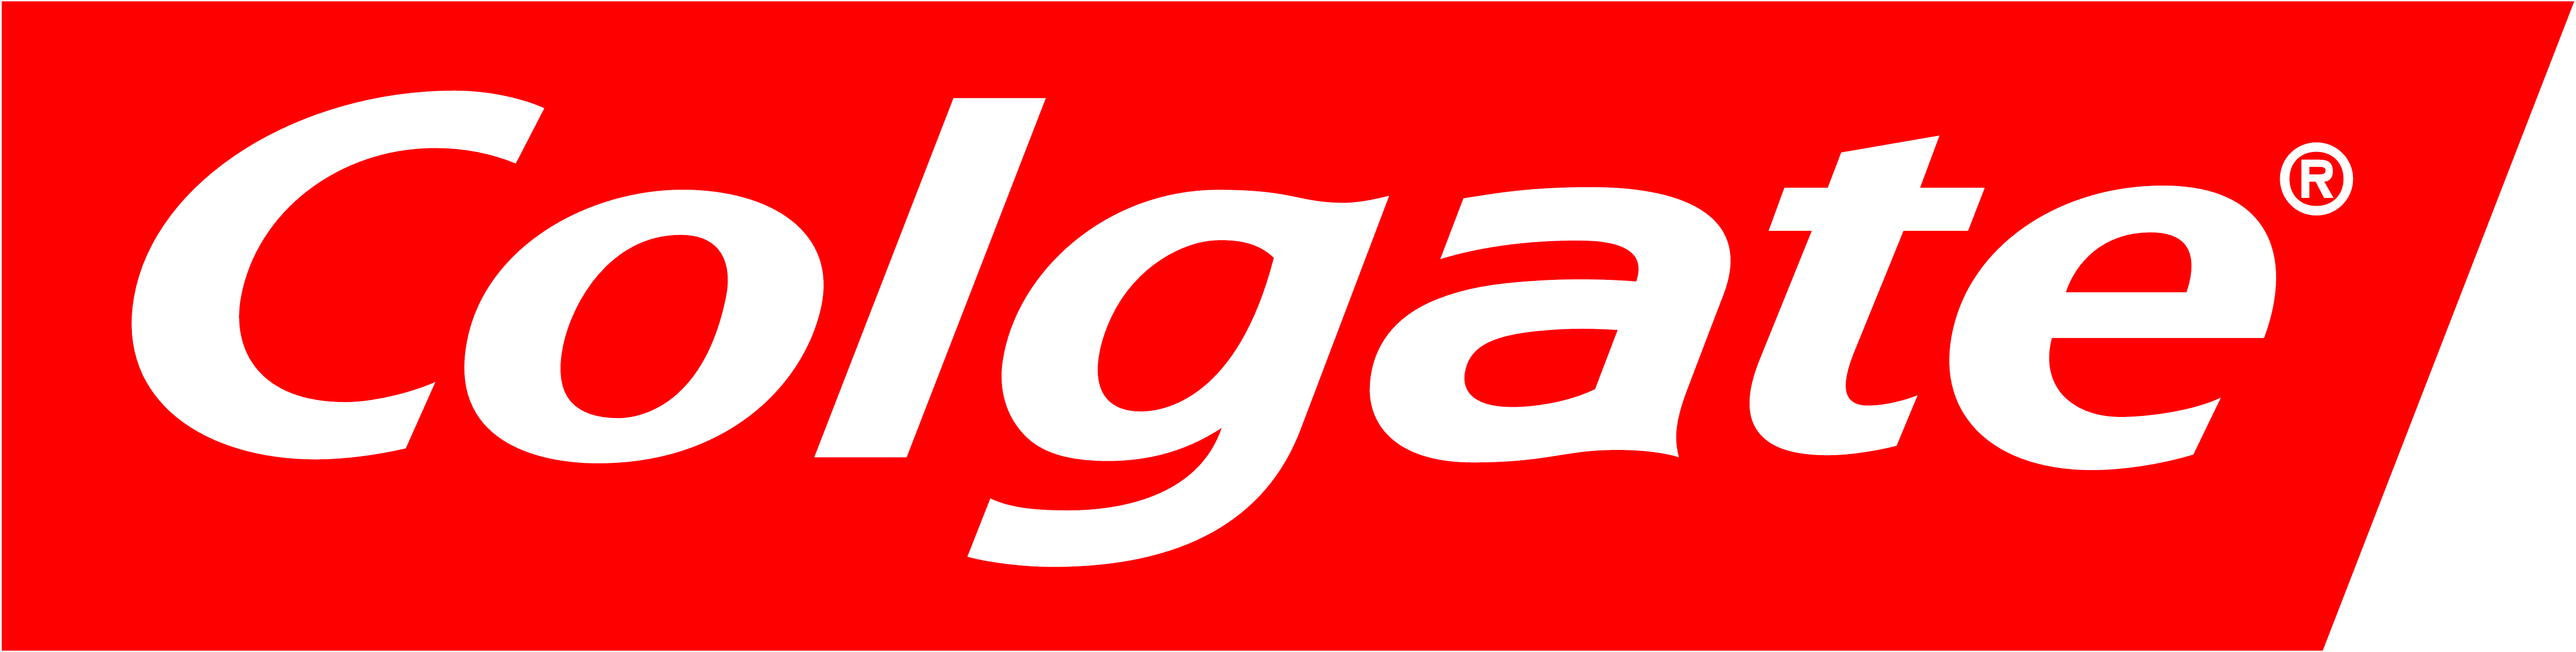 red colgate logo brand png #1151